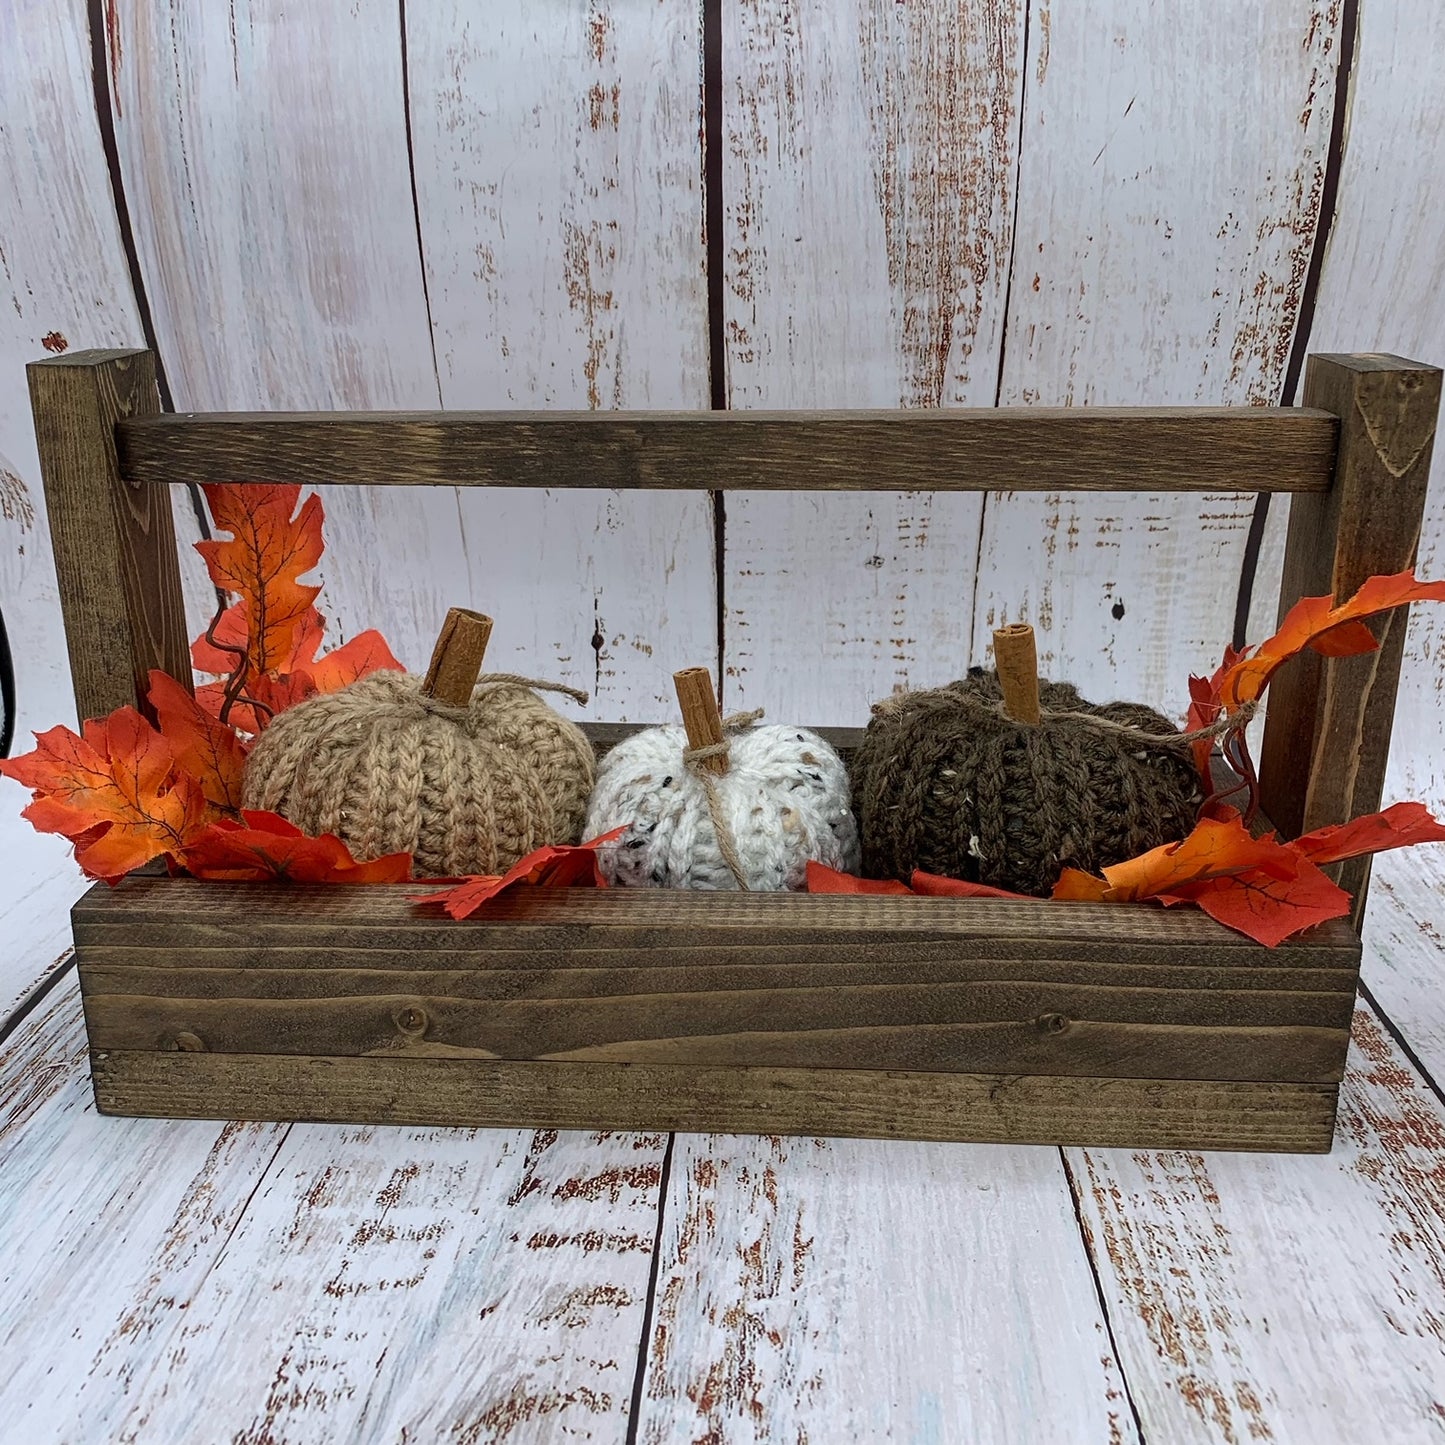 Crochet Pumpkin in Crate with Orange Leaves